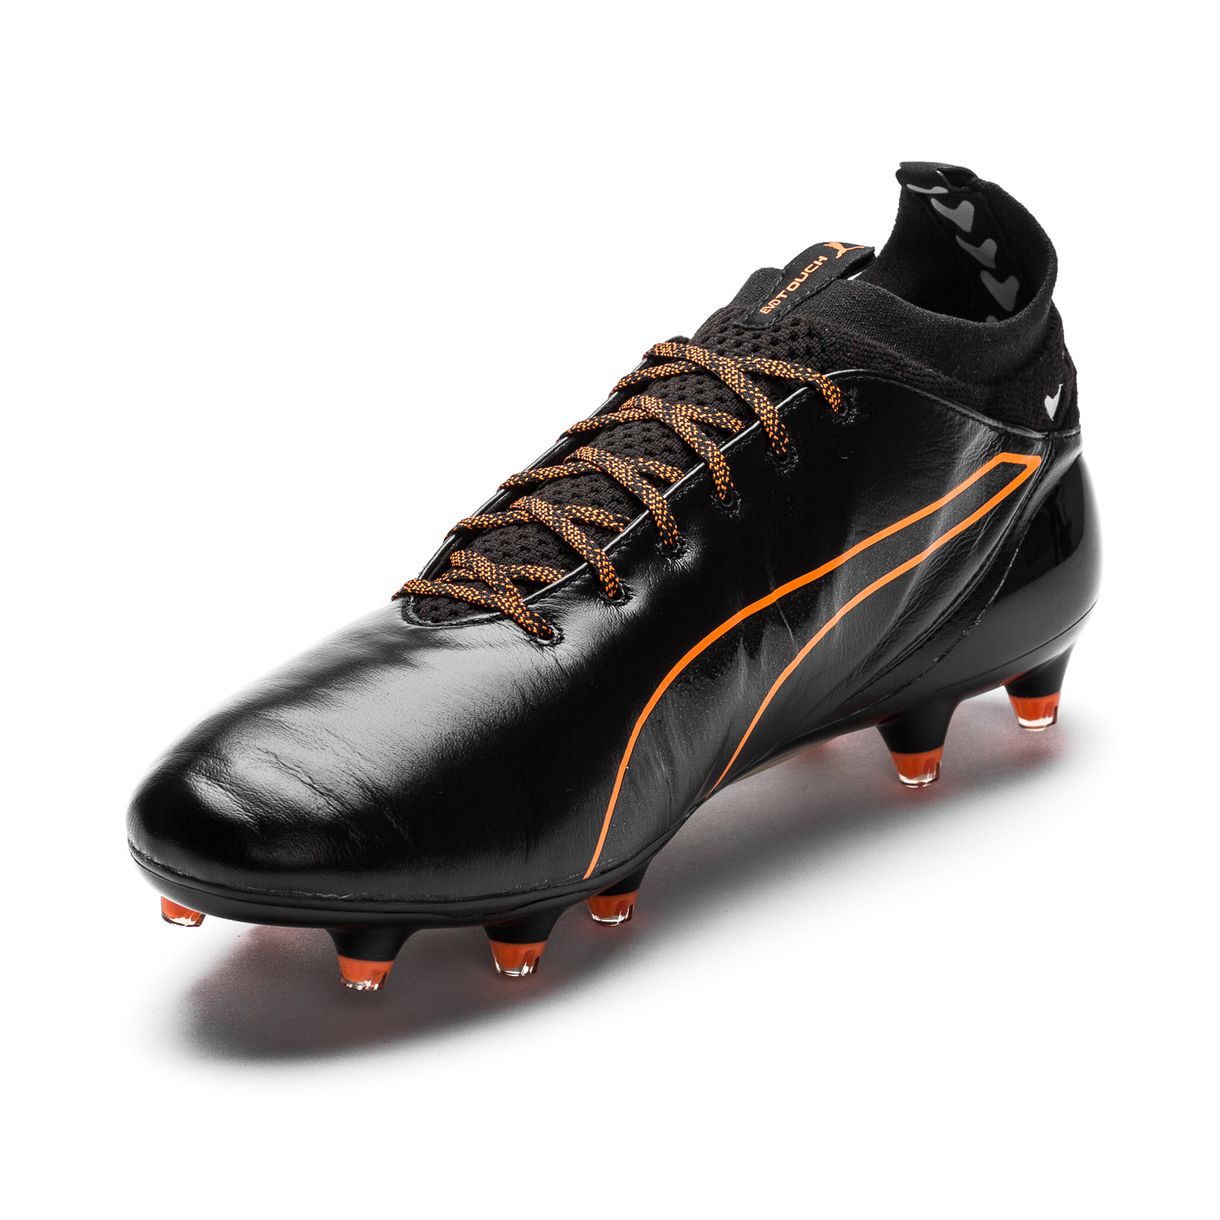 Puma Evotouch Pro FG Football Boots - Puma Black / Puma Black ...